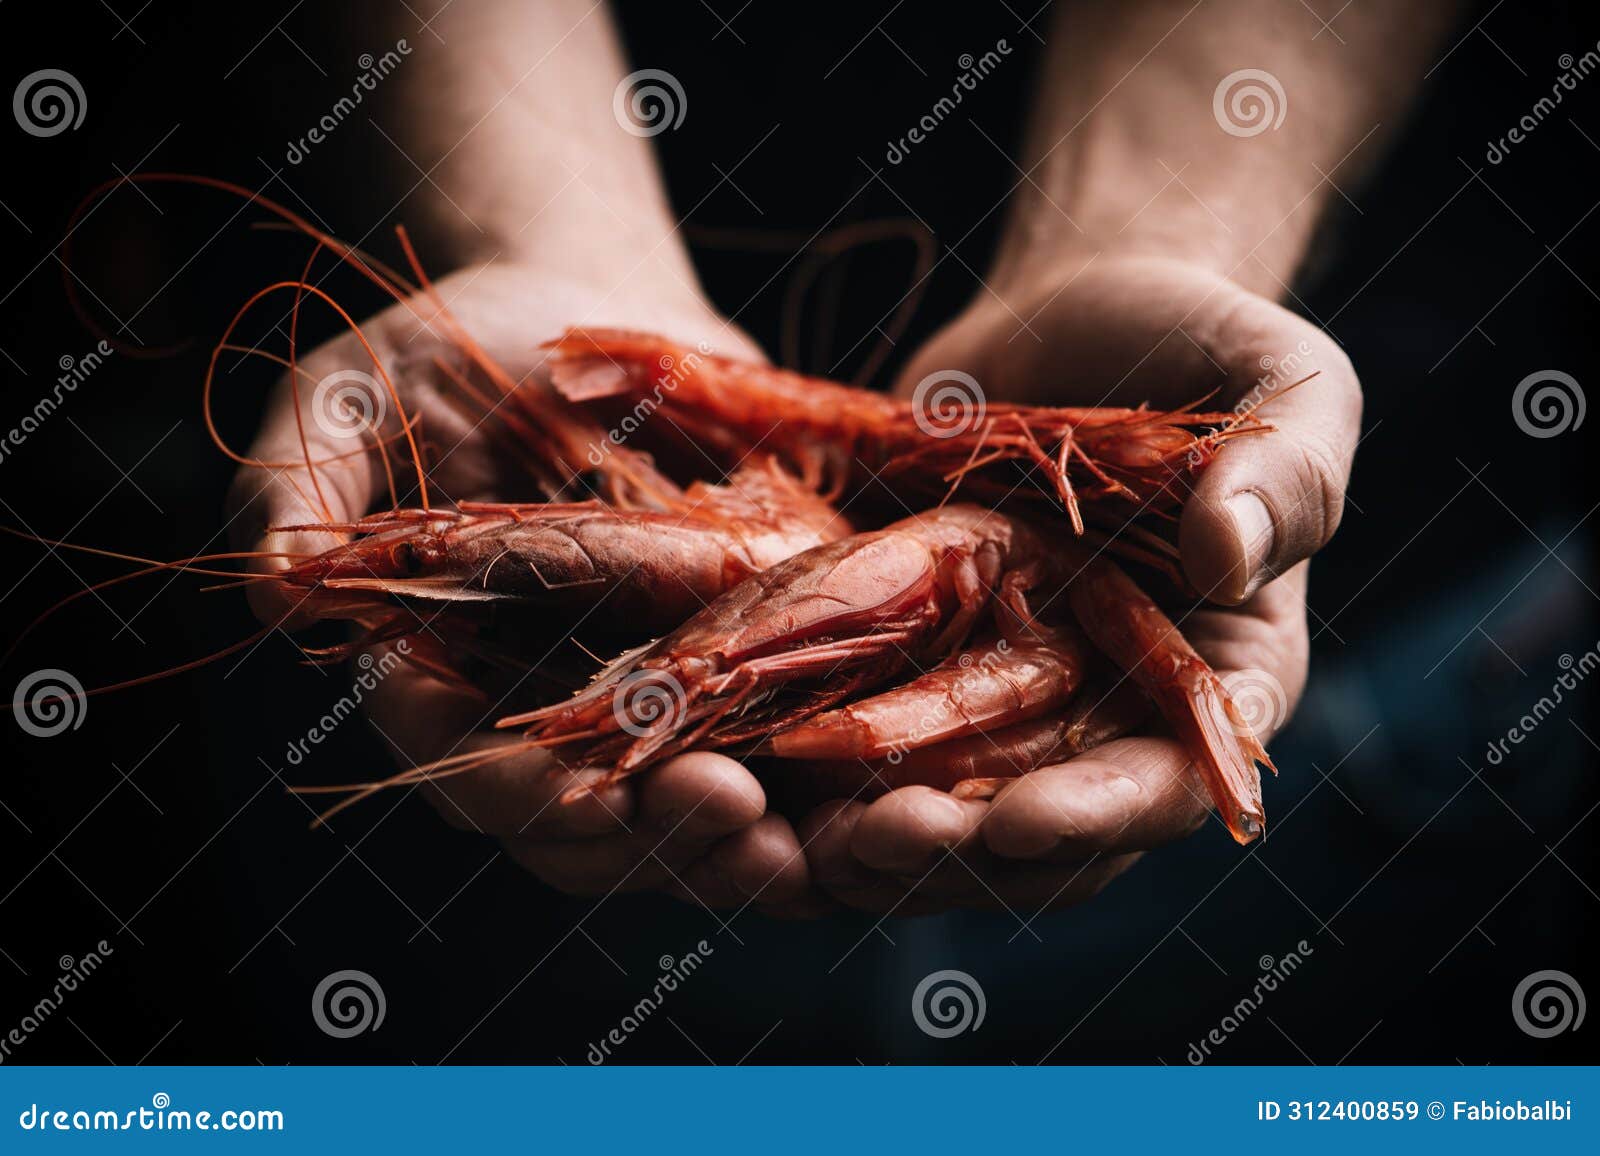 fisherman holding red prawns from mazara del vallo. gambero rosso